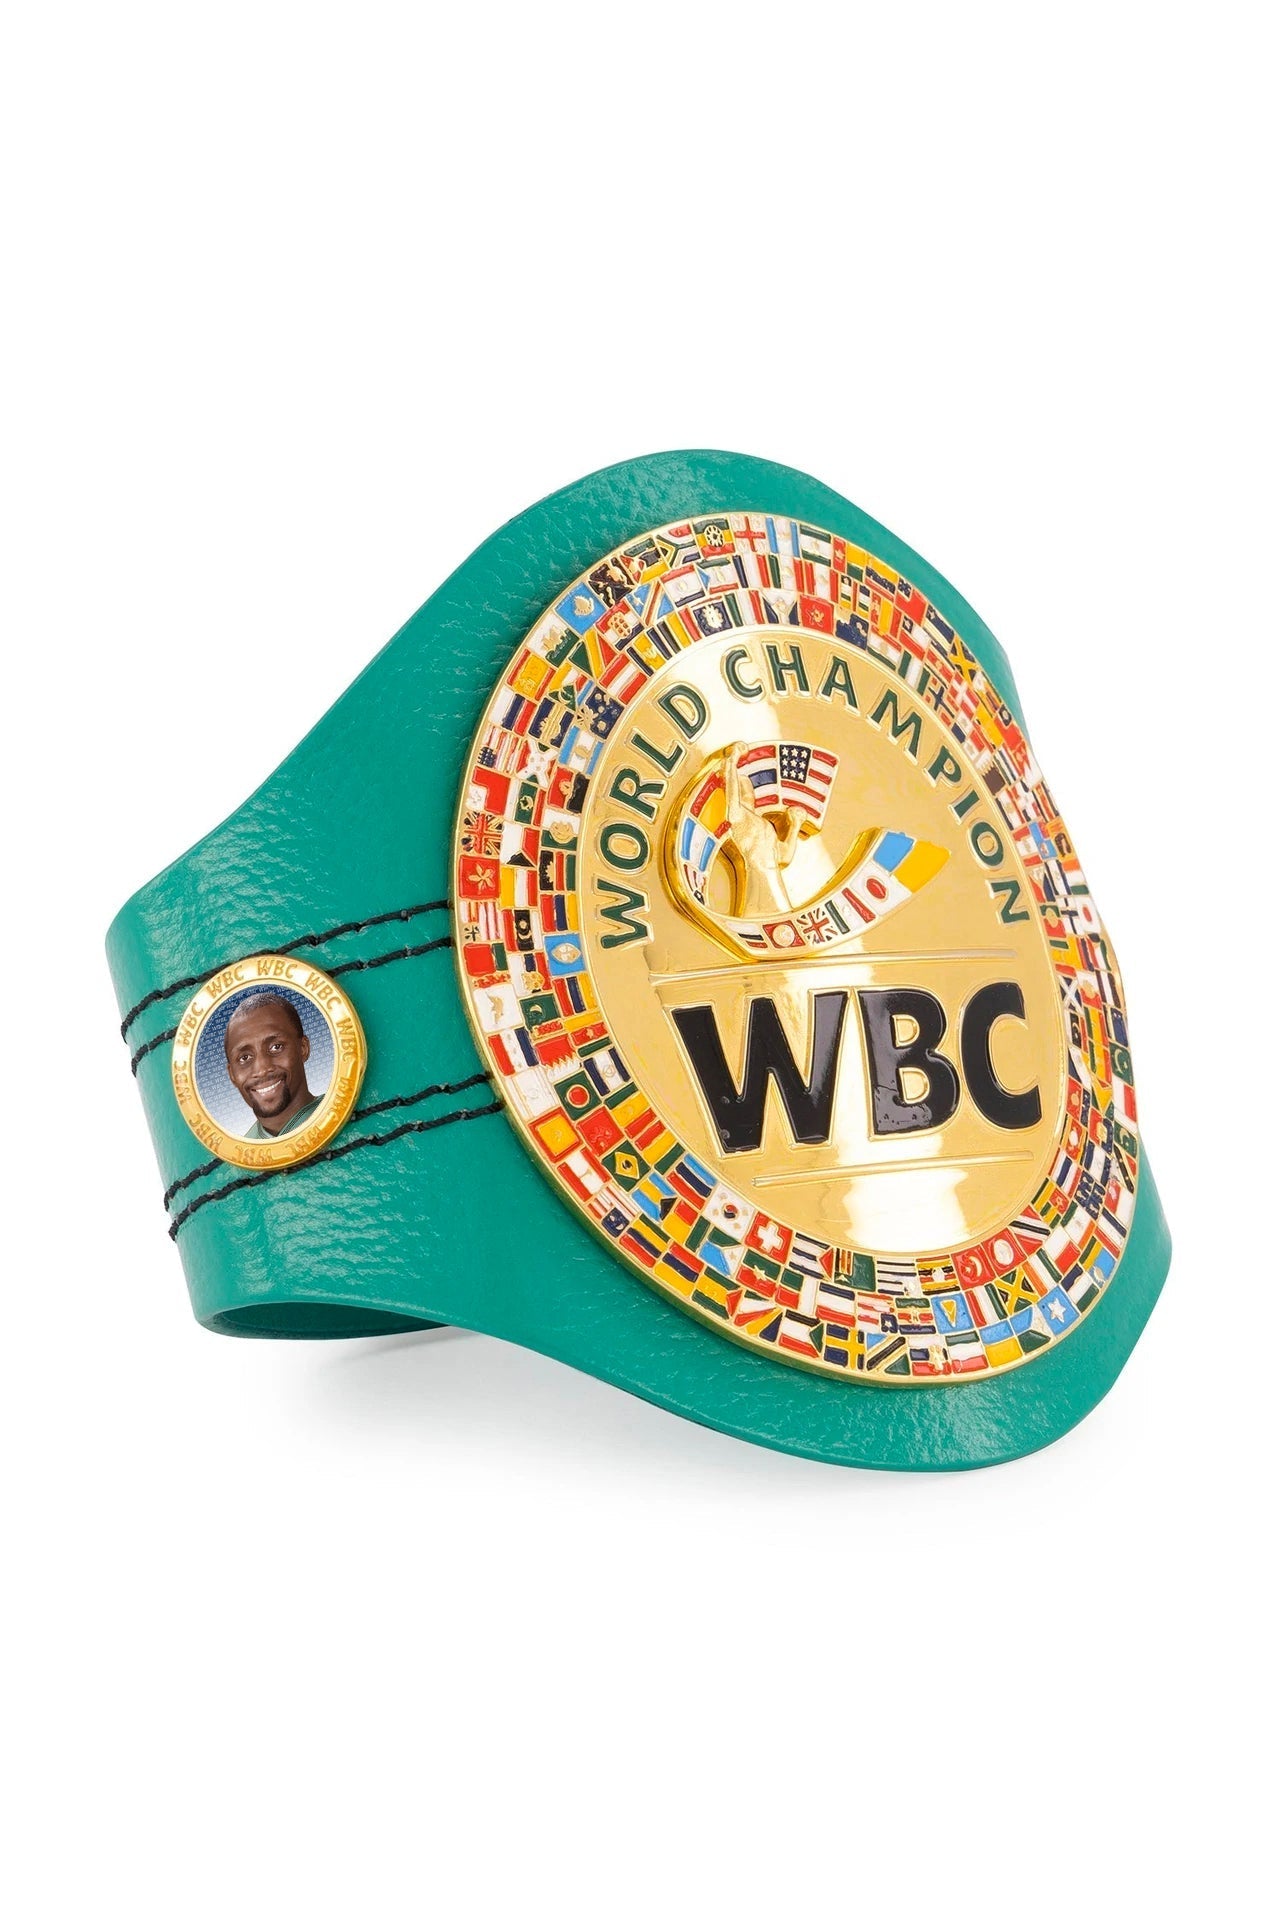 WBC Store WBC - Mini Belt Tommy Hearns